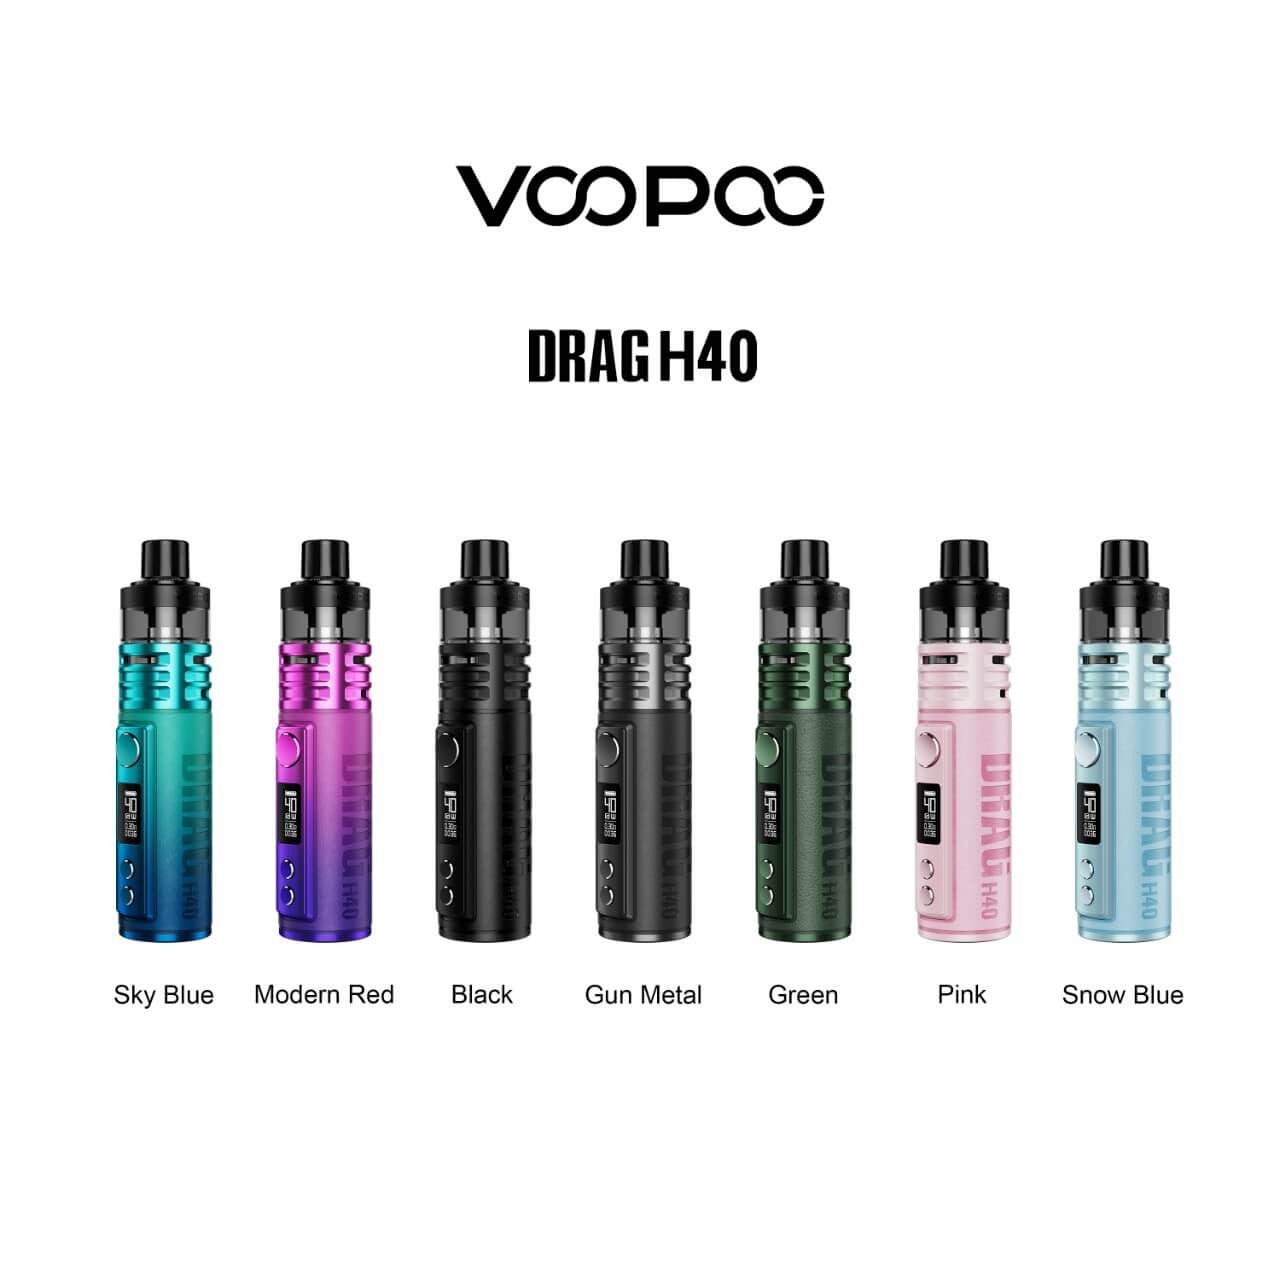 VooPoo DRAG H40 Kit Best Sales Price - Vape Kits